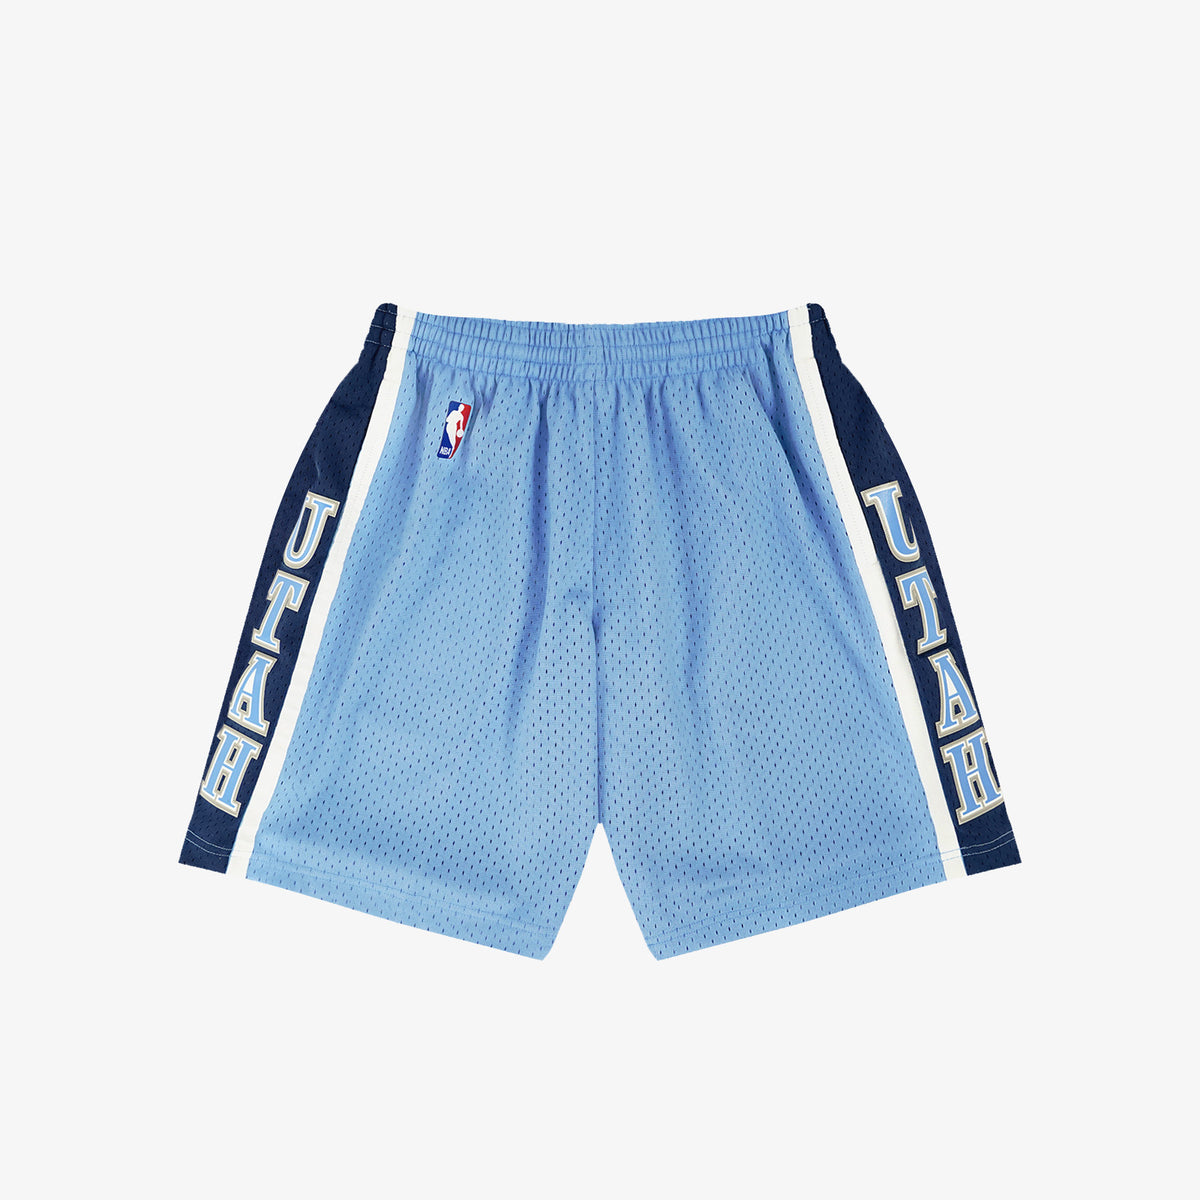 Mitchell & Ness Utah Jazz NBA Shorts for sale